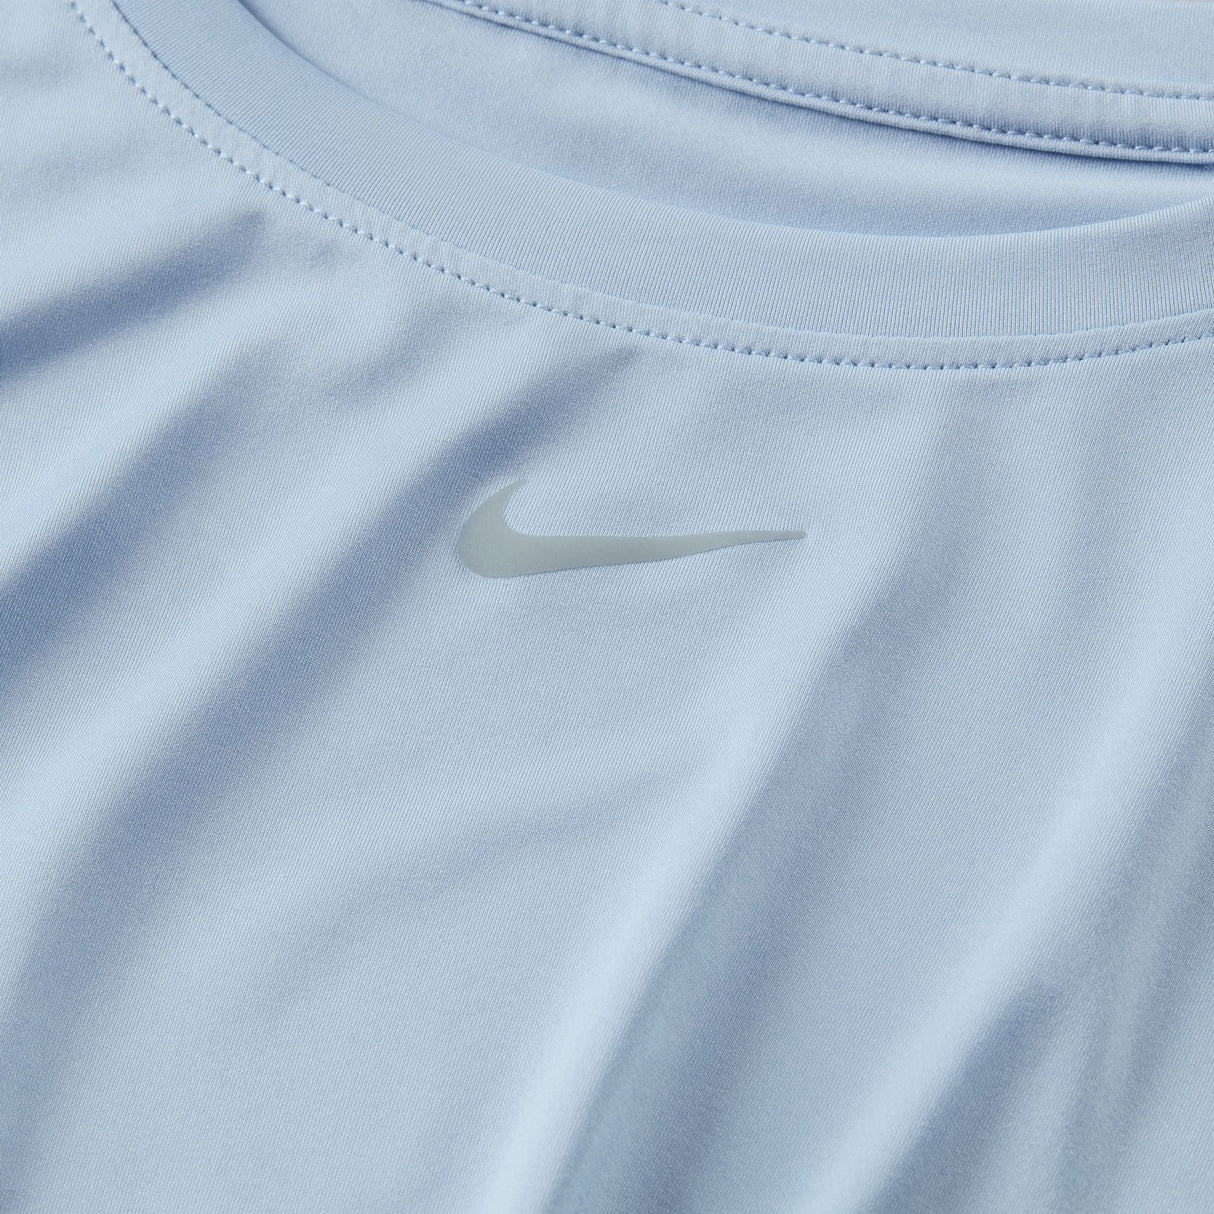 Nike Women's One Classic Dri-FIT Short-Sleeve Top